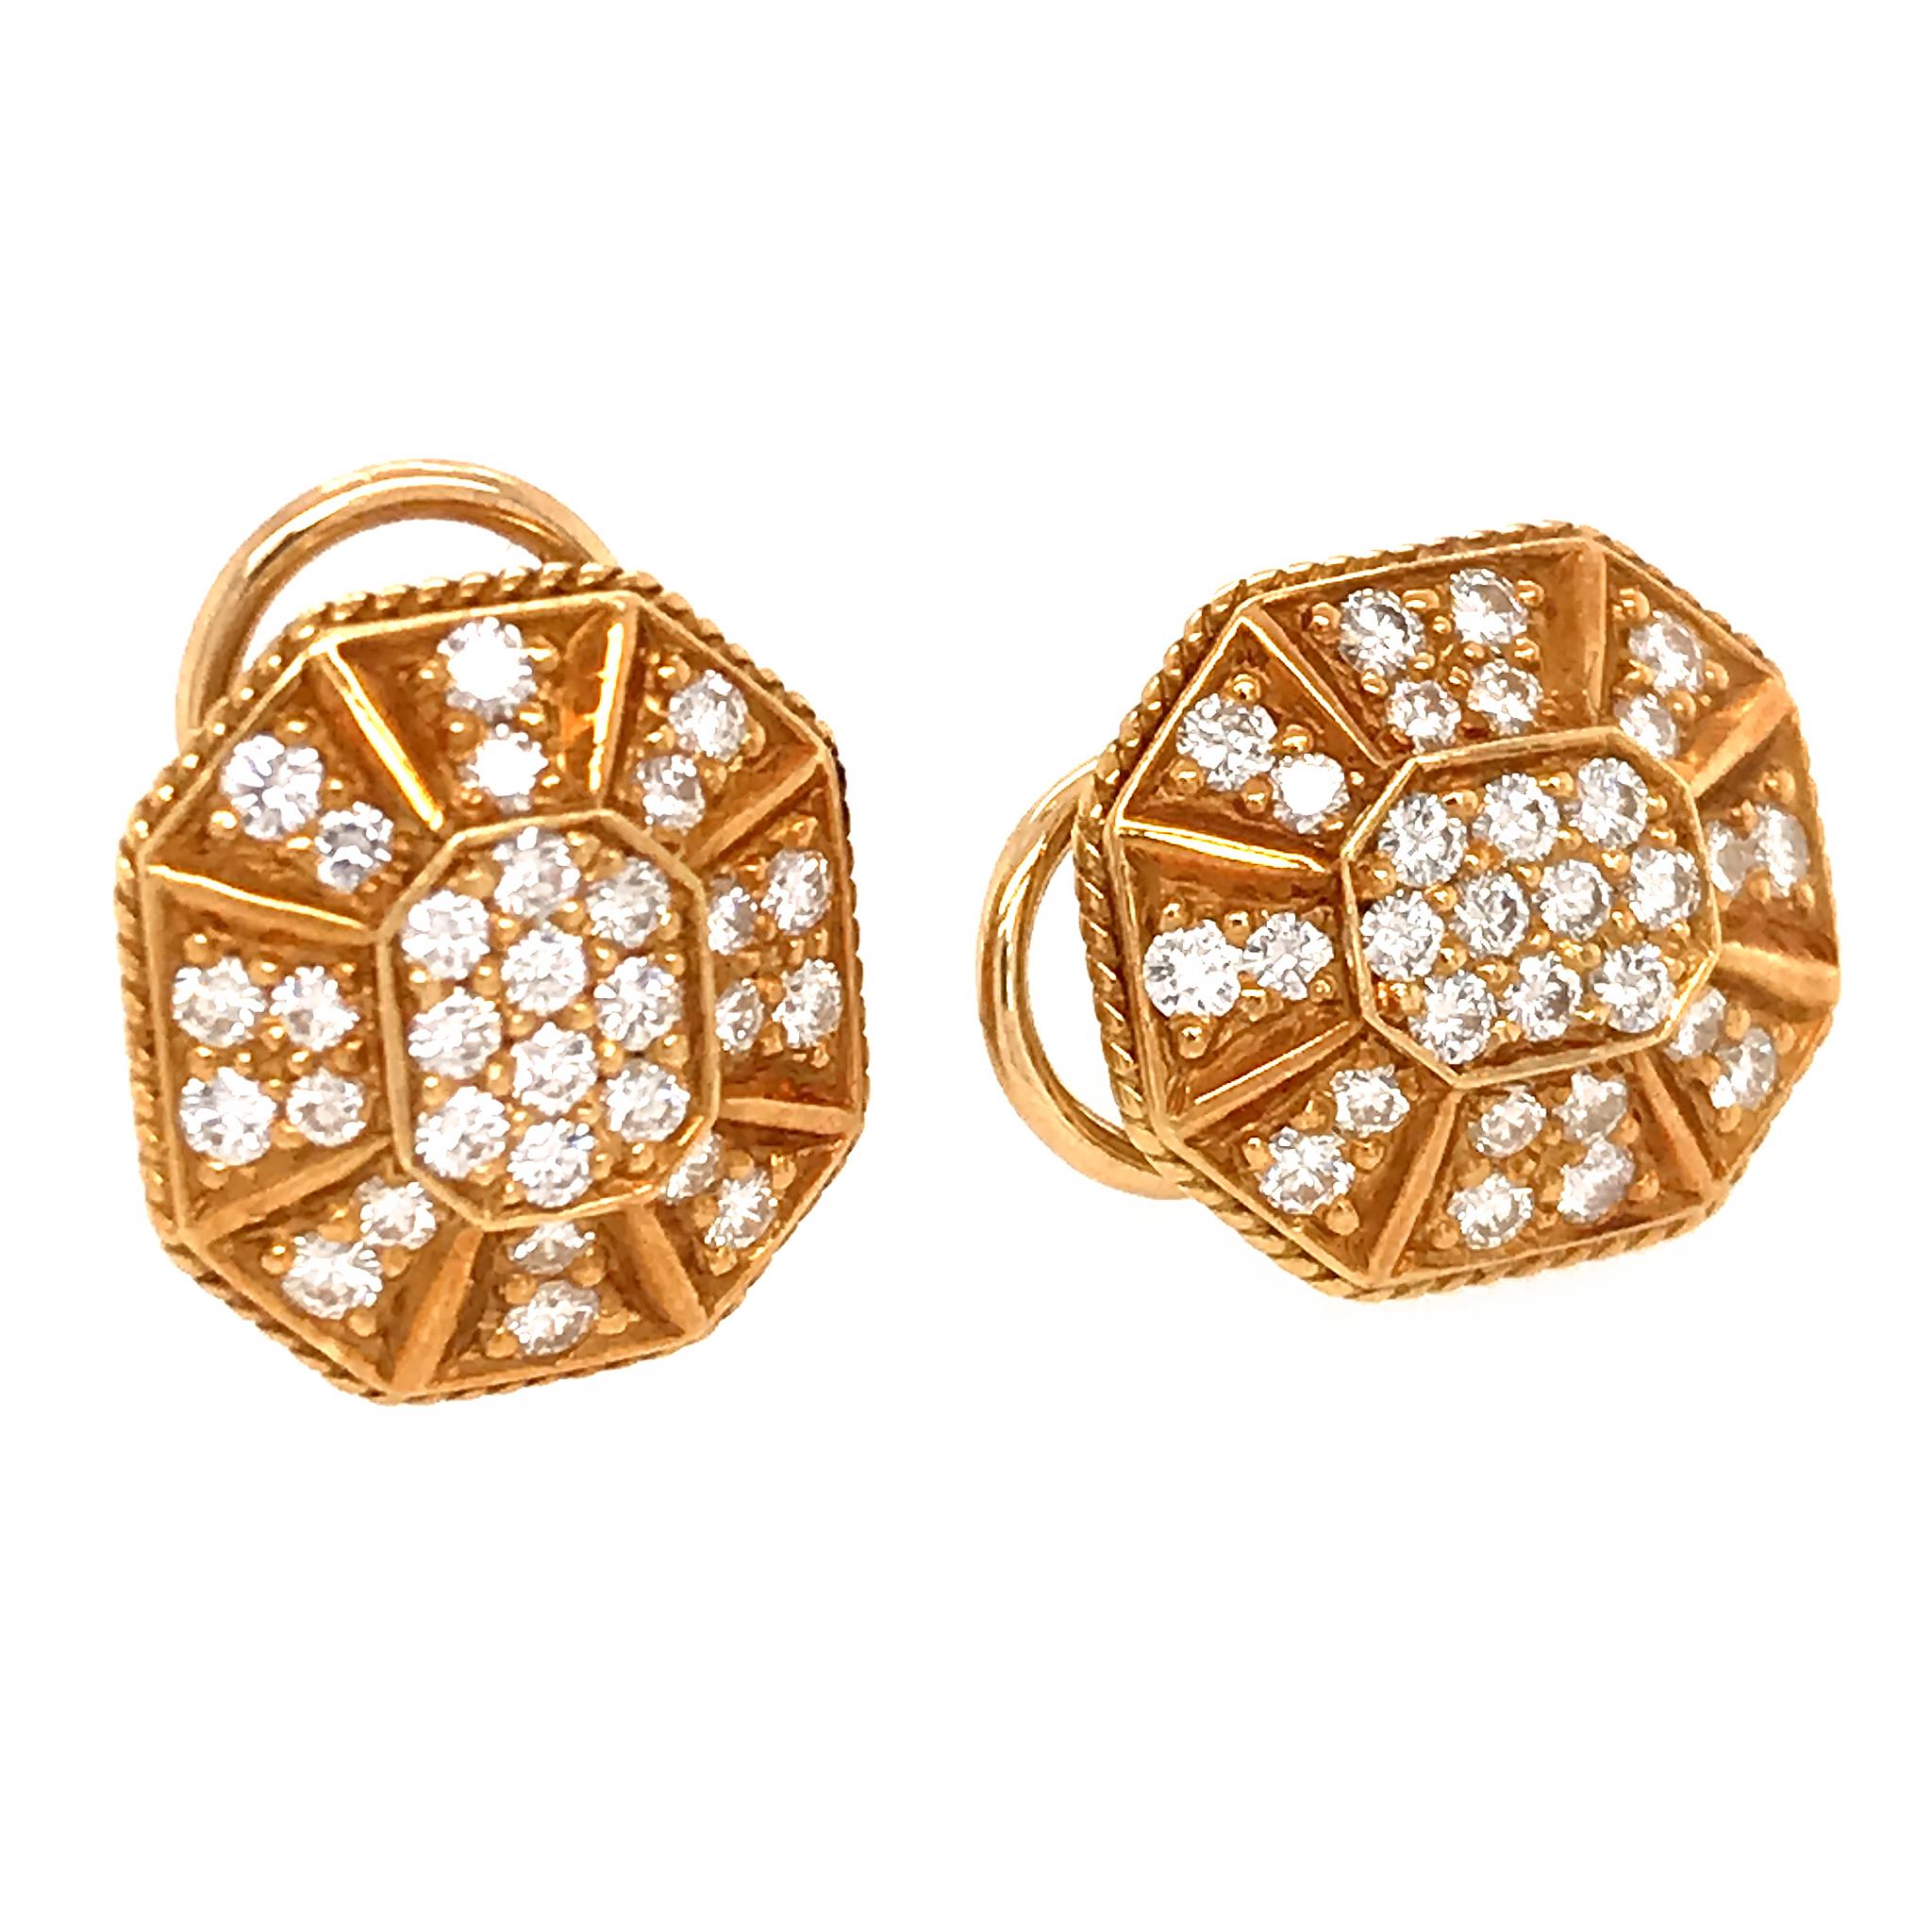 Round Cut 18 Karat Yellow Gold Diamond Earrings